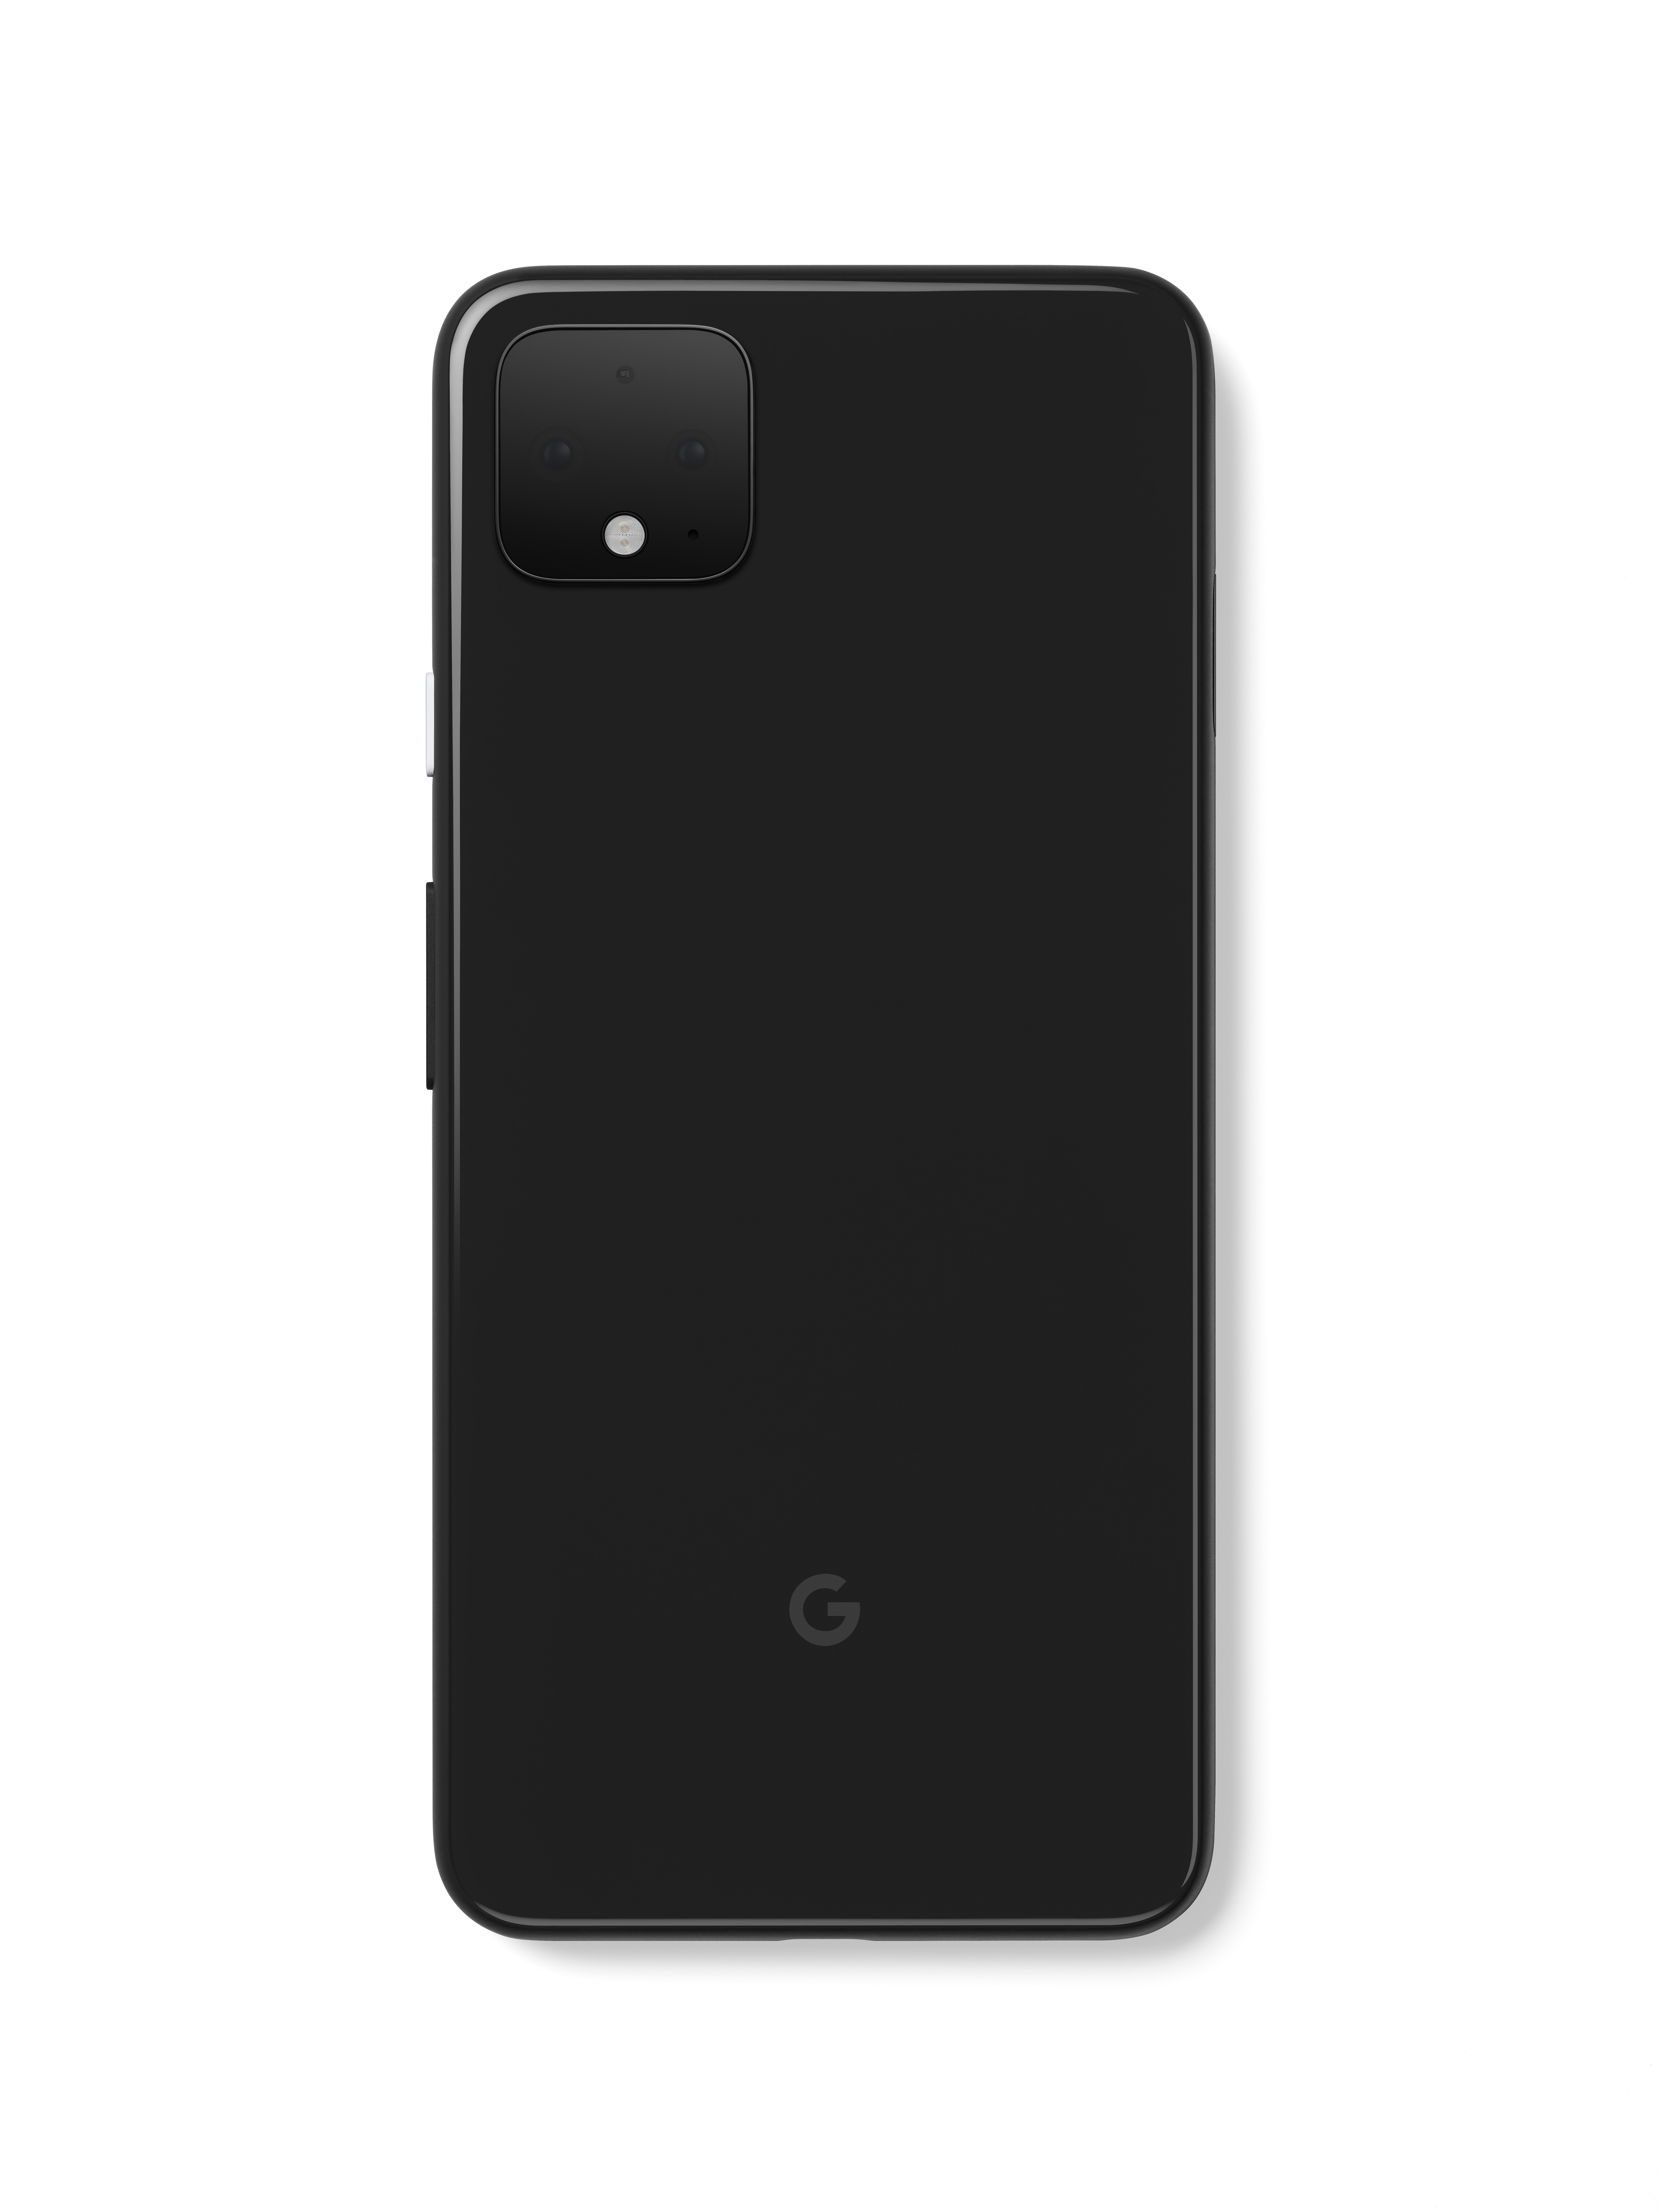 Google Pixel 4 XL Black 64 GB, Unlocked - image 1 of 4